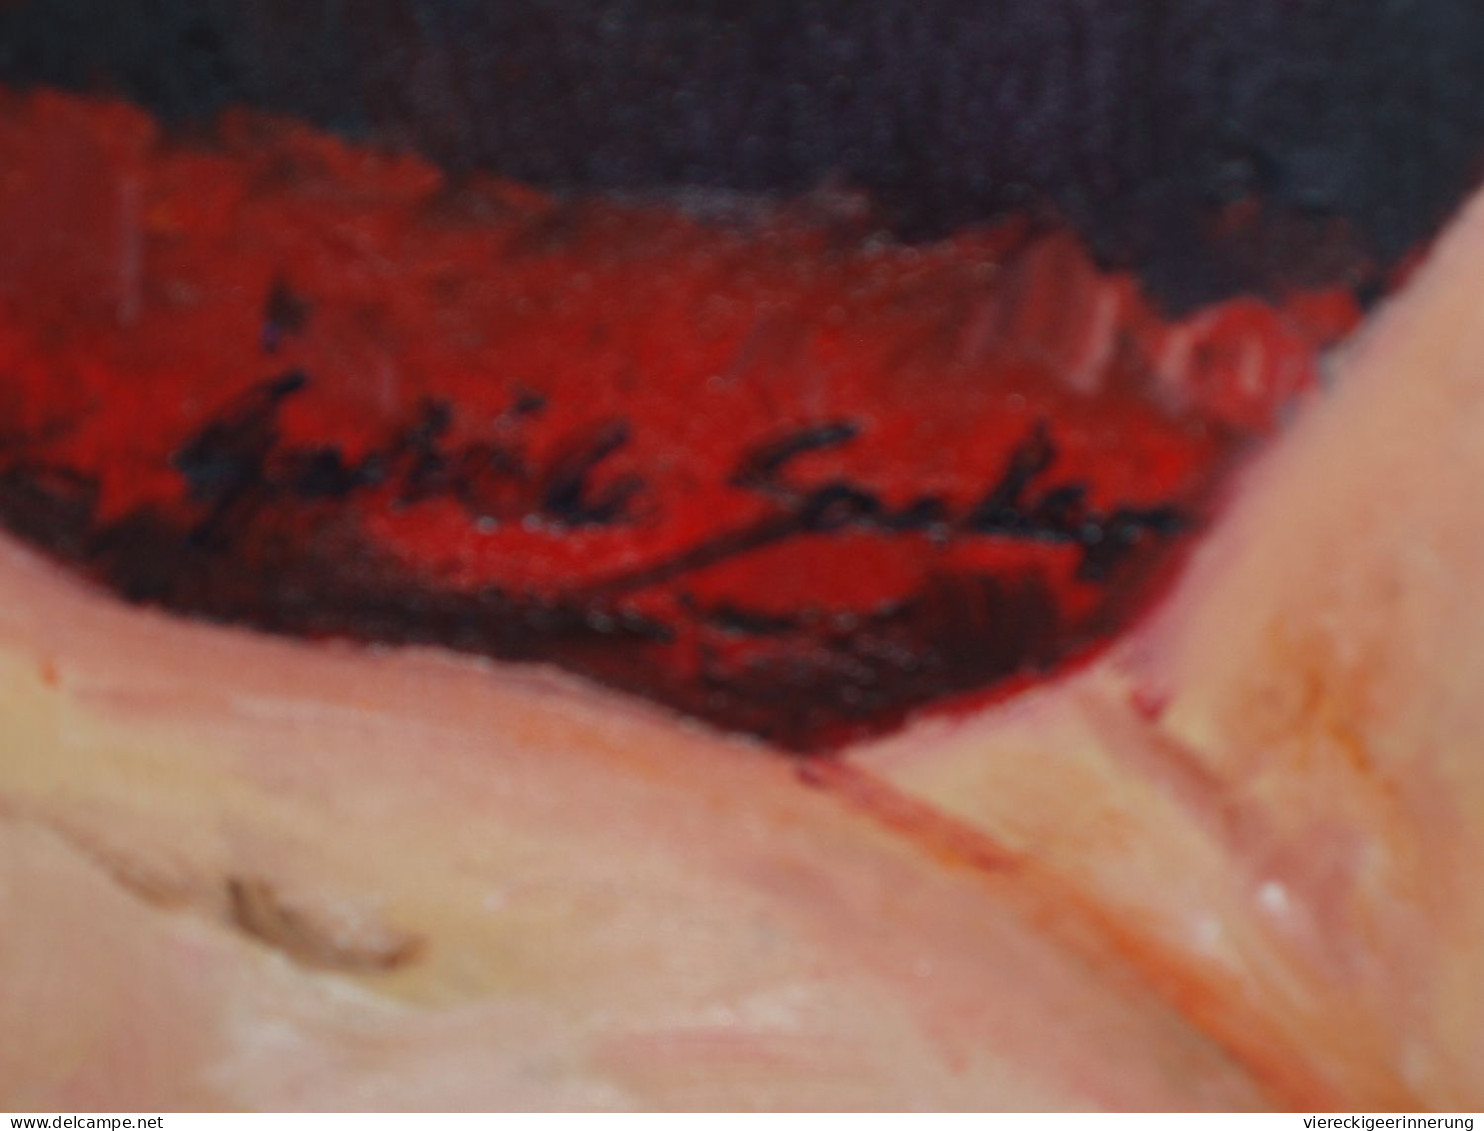 ! Ölgemälde Frauenakt Nach Amedeo Modigliani , Oil Painting, Famous Painter - Oelbilder